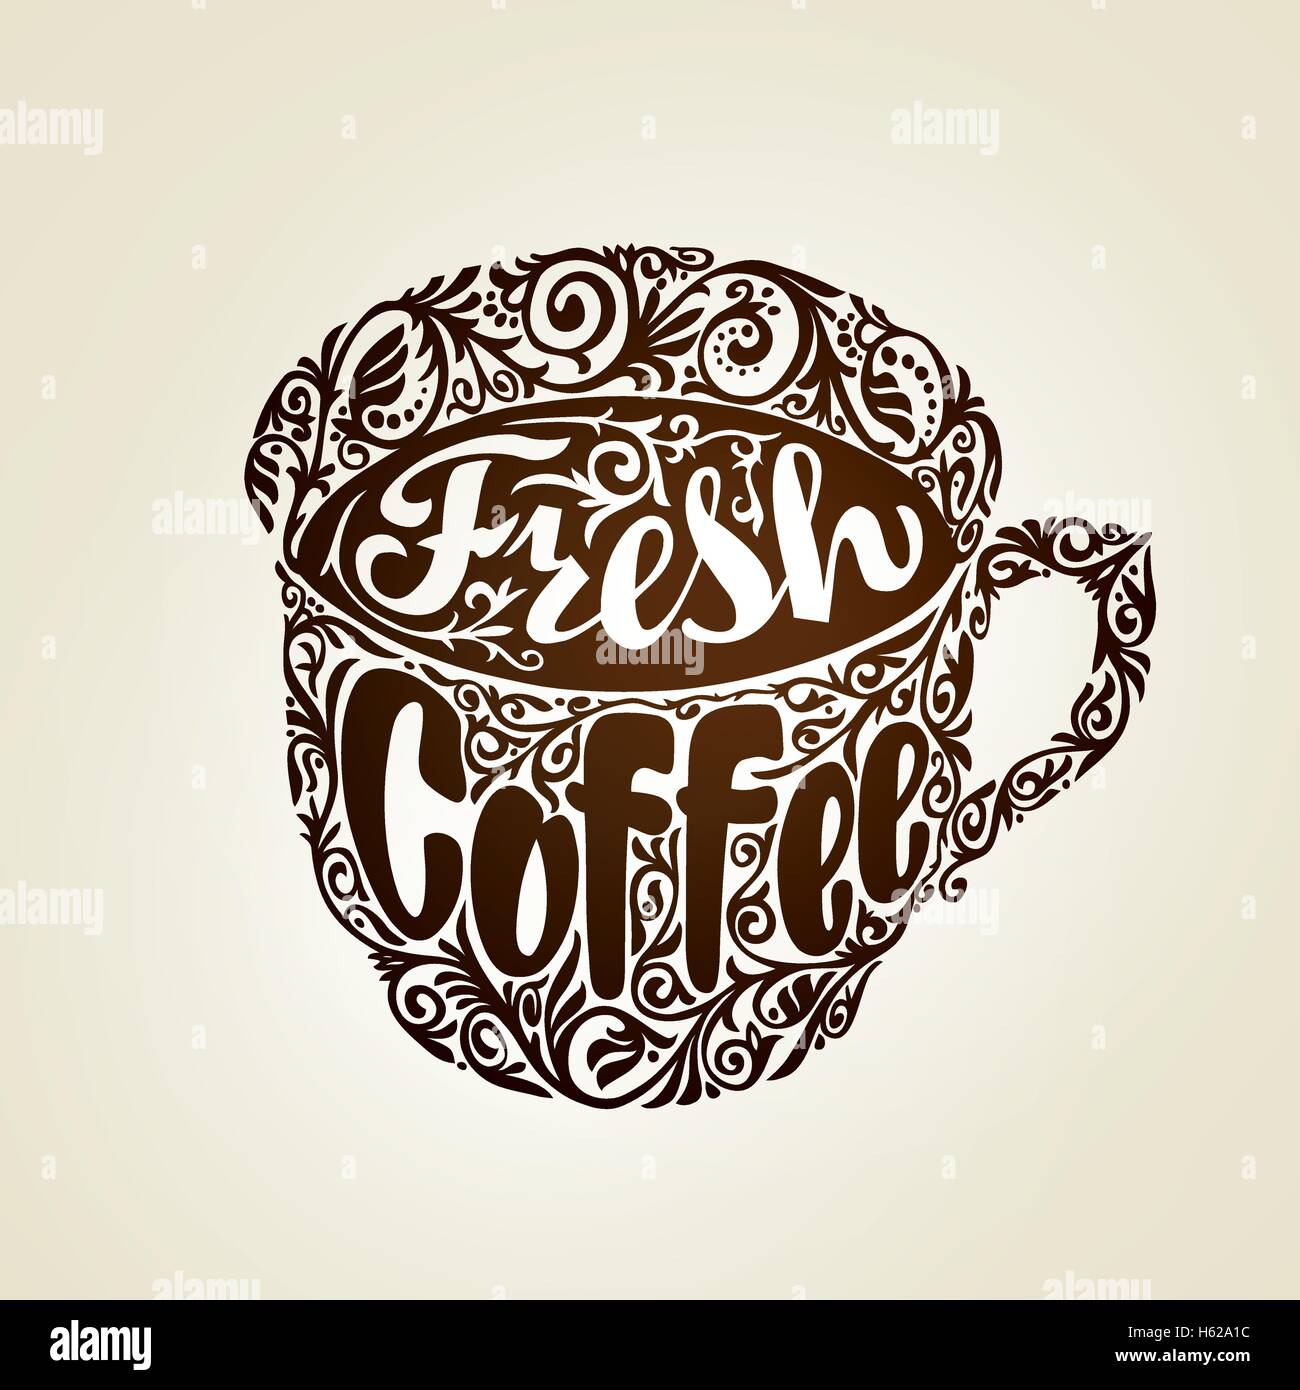 Frischen Kaffee. Tasse mit dekorativen Mustern. Vektor-illustration Stock Vektor